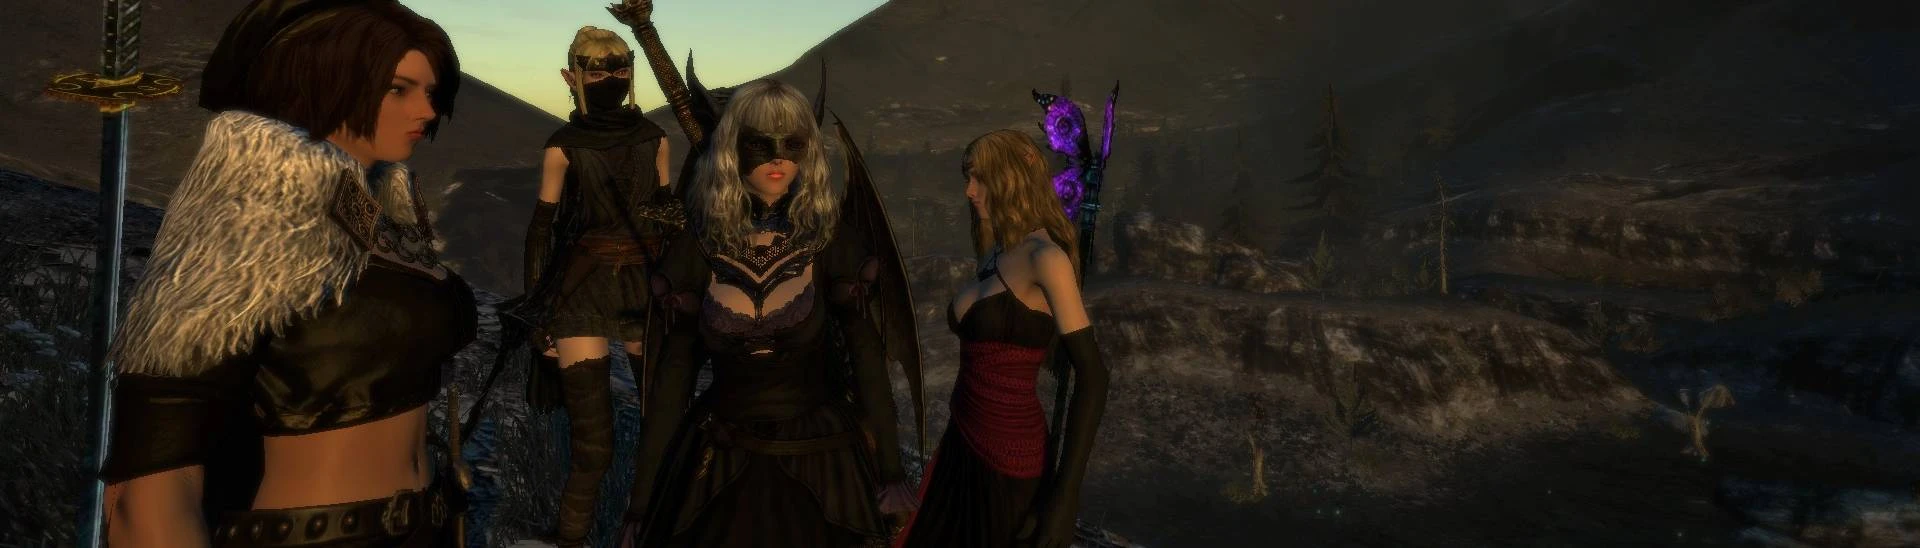 Assassins at Dragons Dogma Dark Arisen Nexus - Mods and community